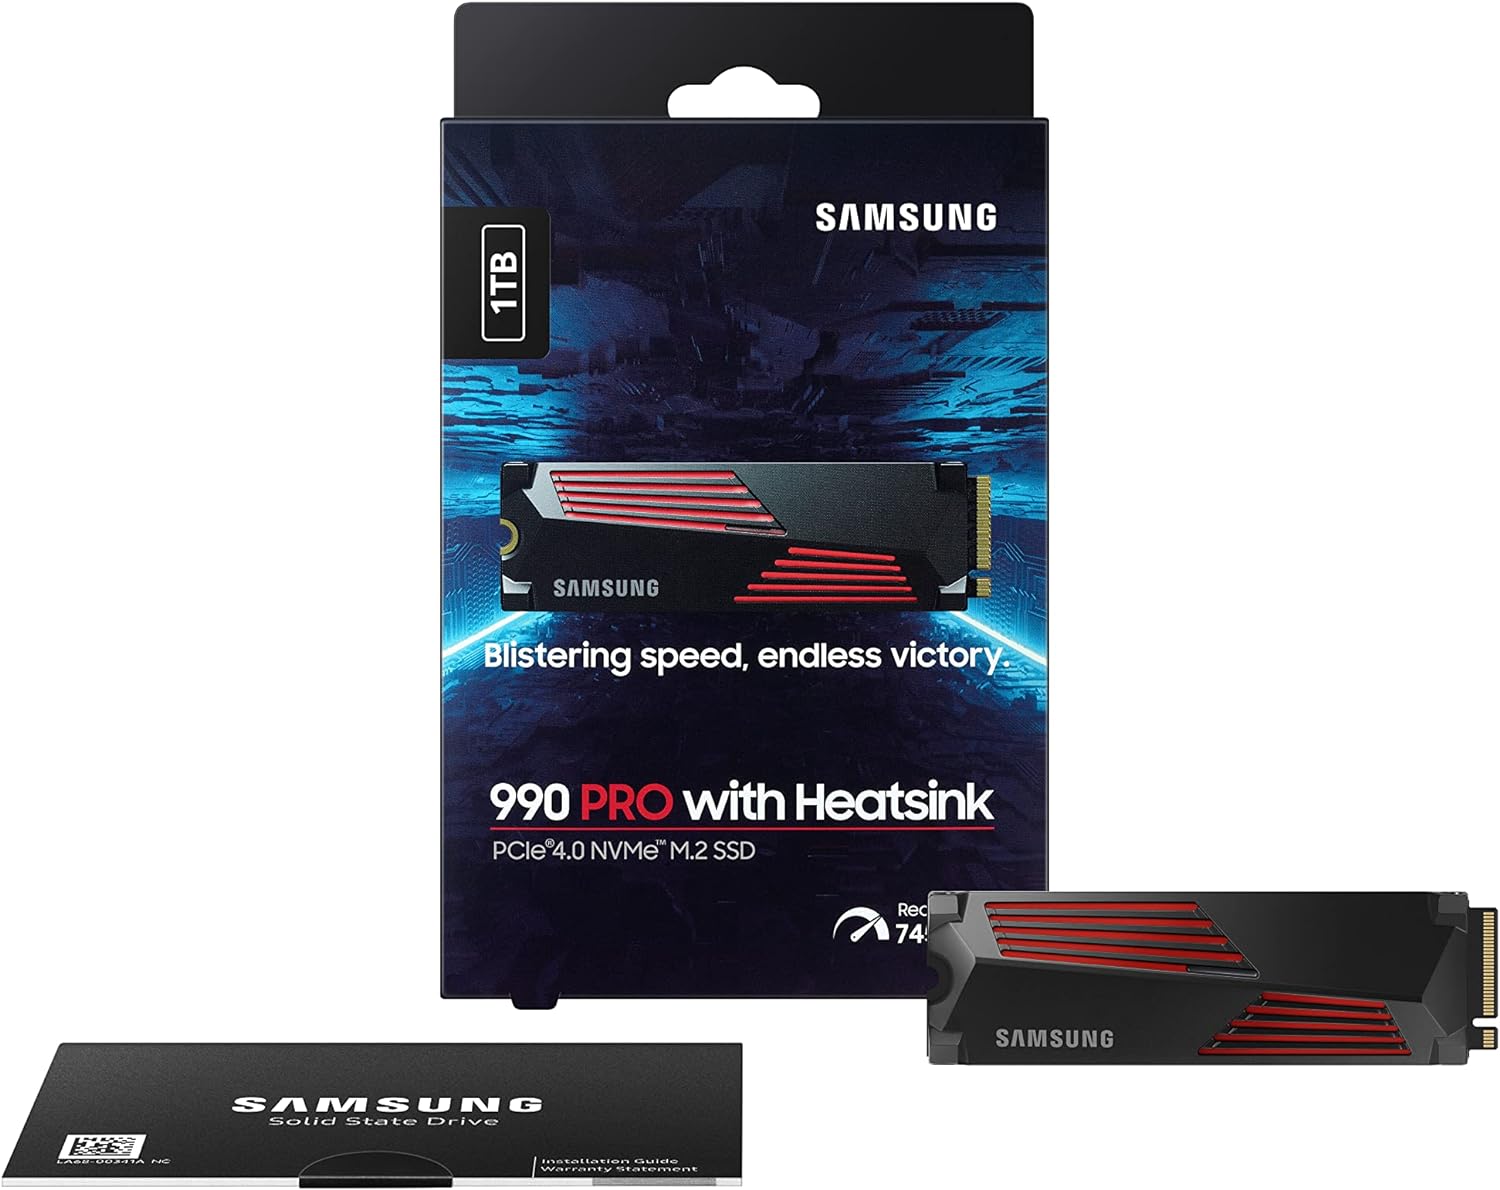 SAMSUNG 990 PRO WITH HEATSINK 1TB PCIE 4.0 NVME M.2 SSD